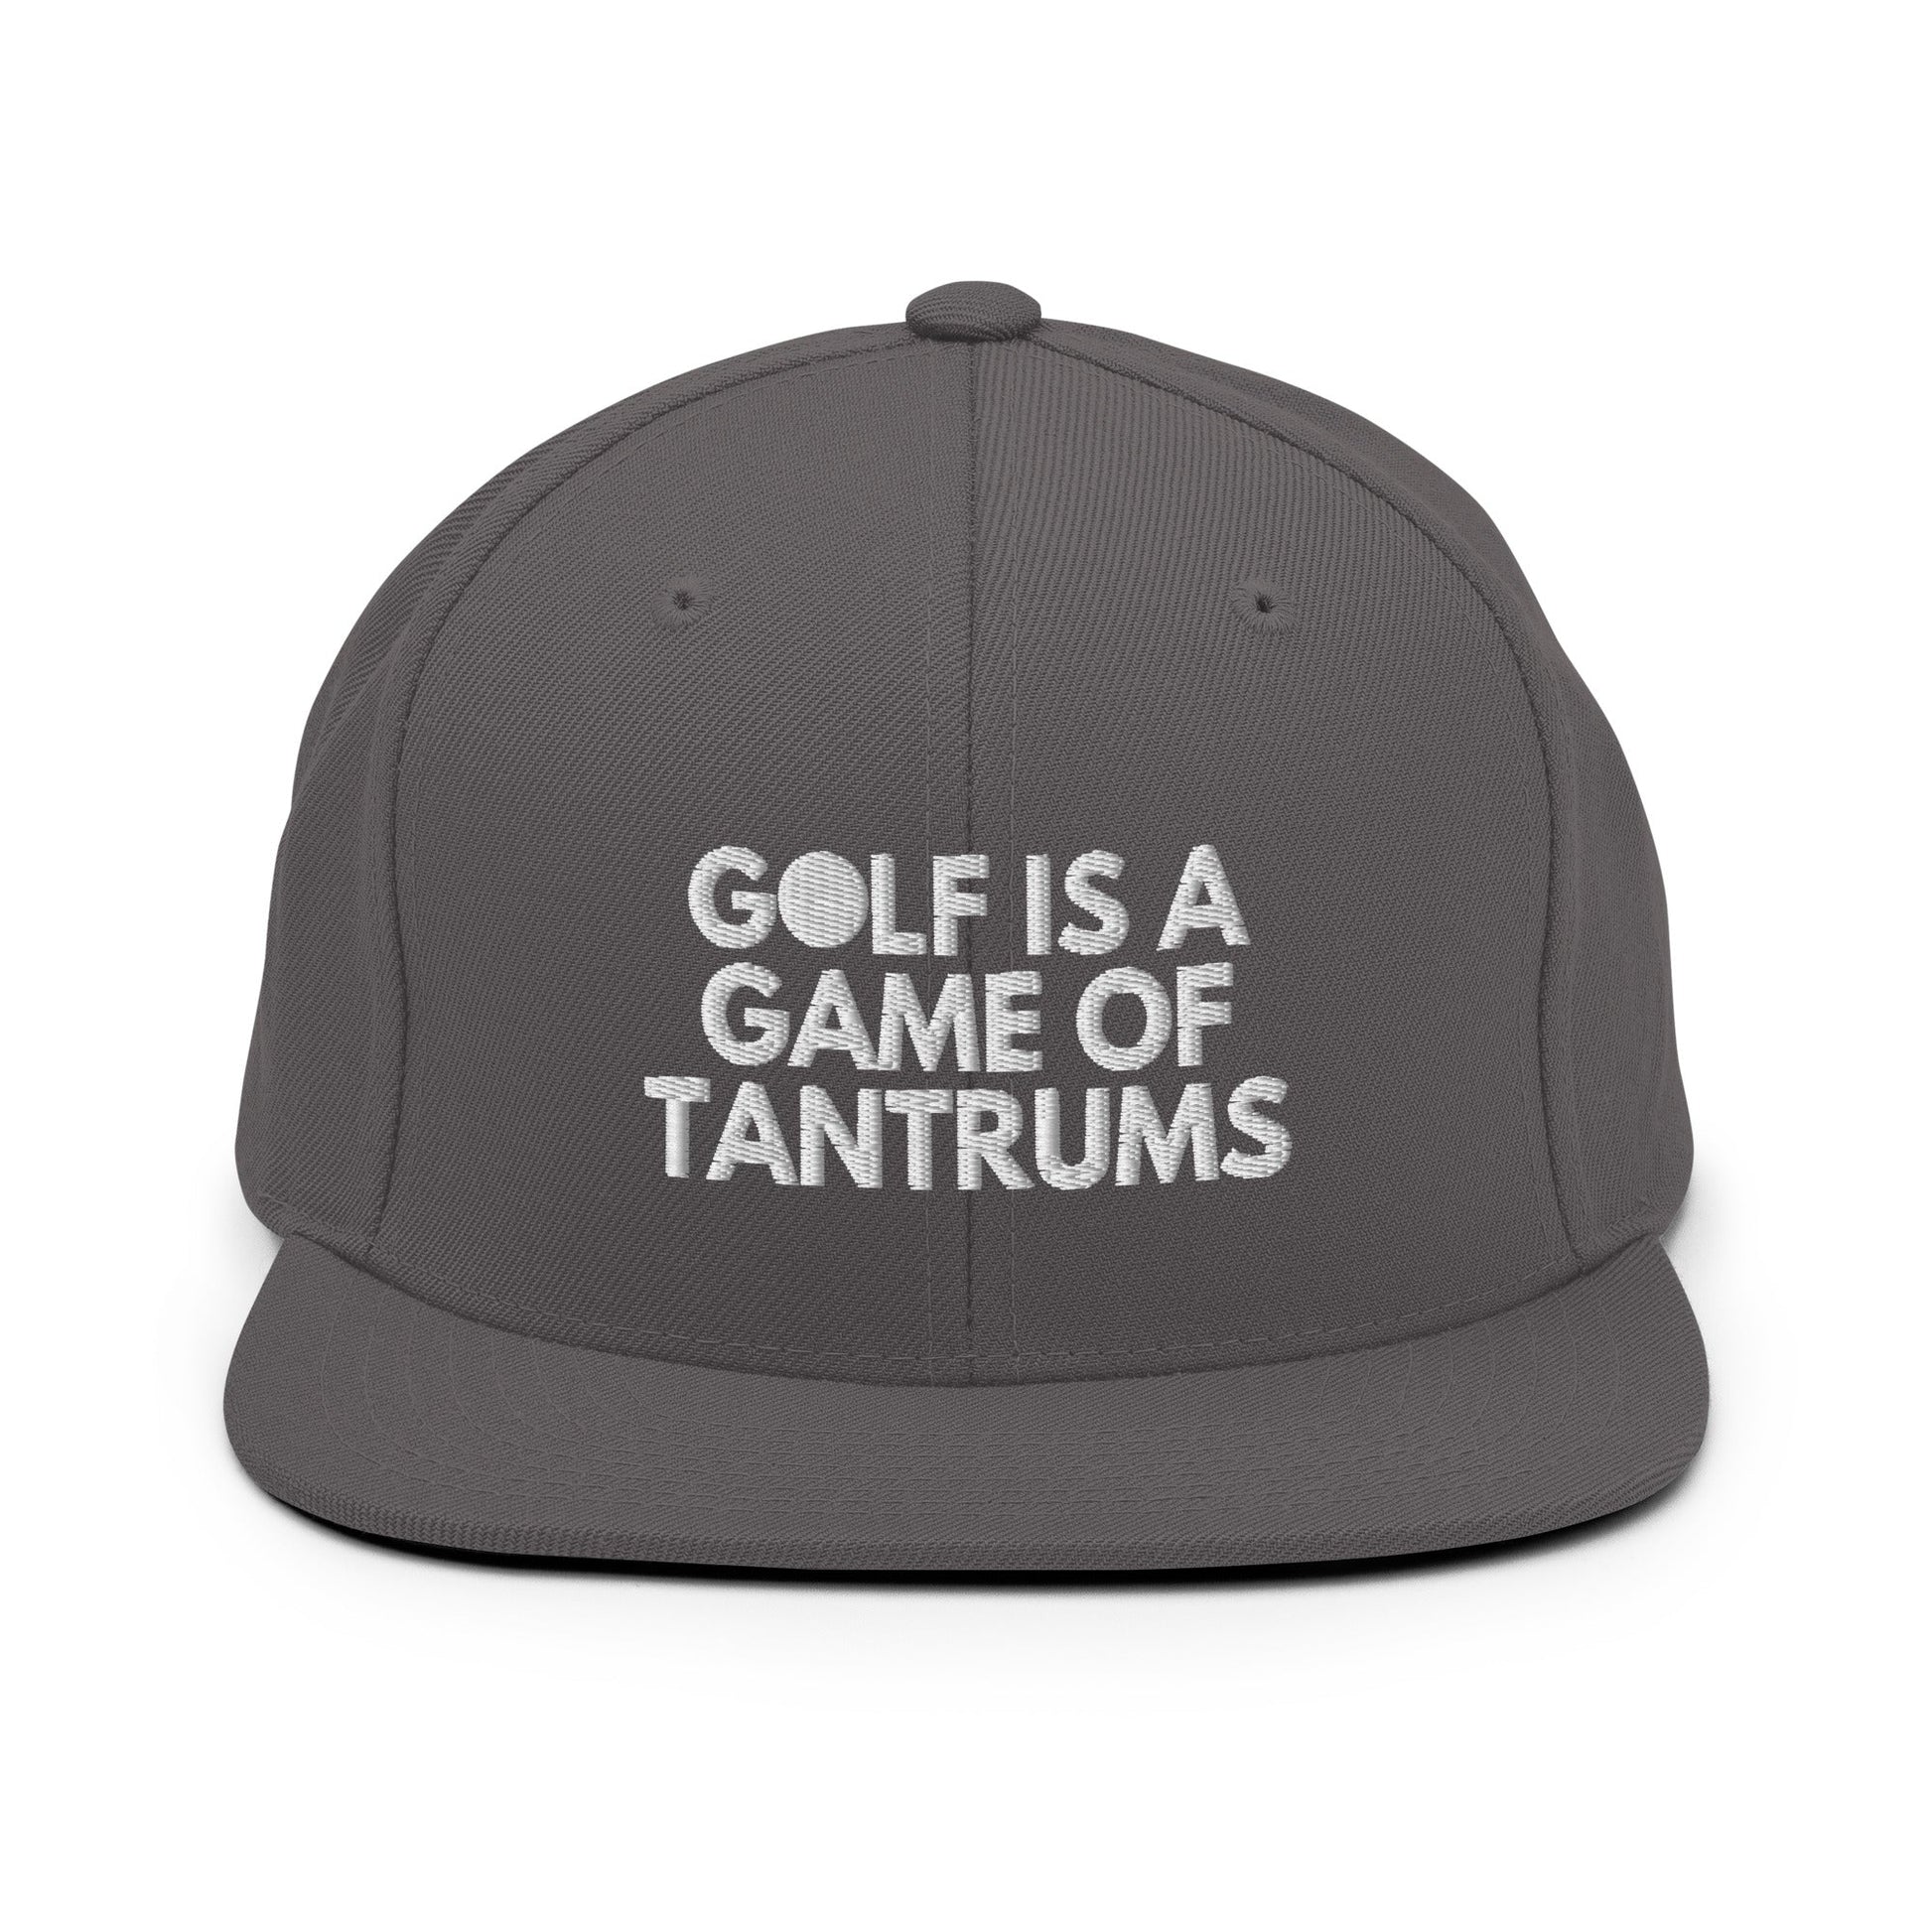 Funny Golfer Gifts  Snapback Hat Dark Grey Golf Is A Game Of Tantrums Hat Snapback Hat